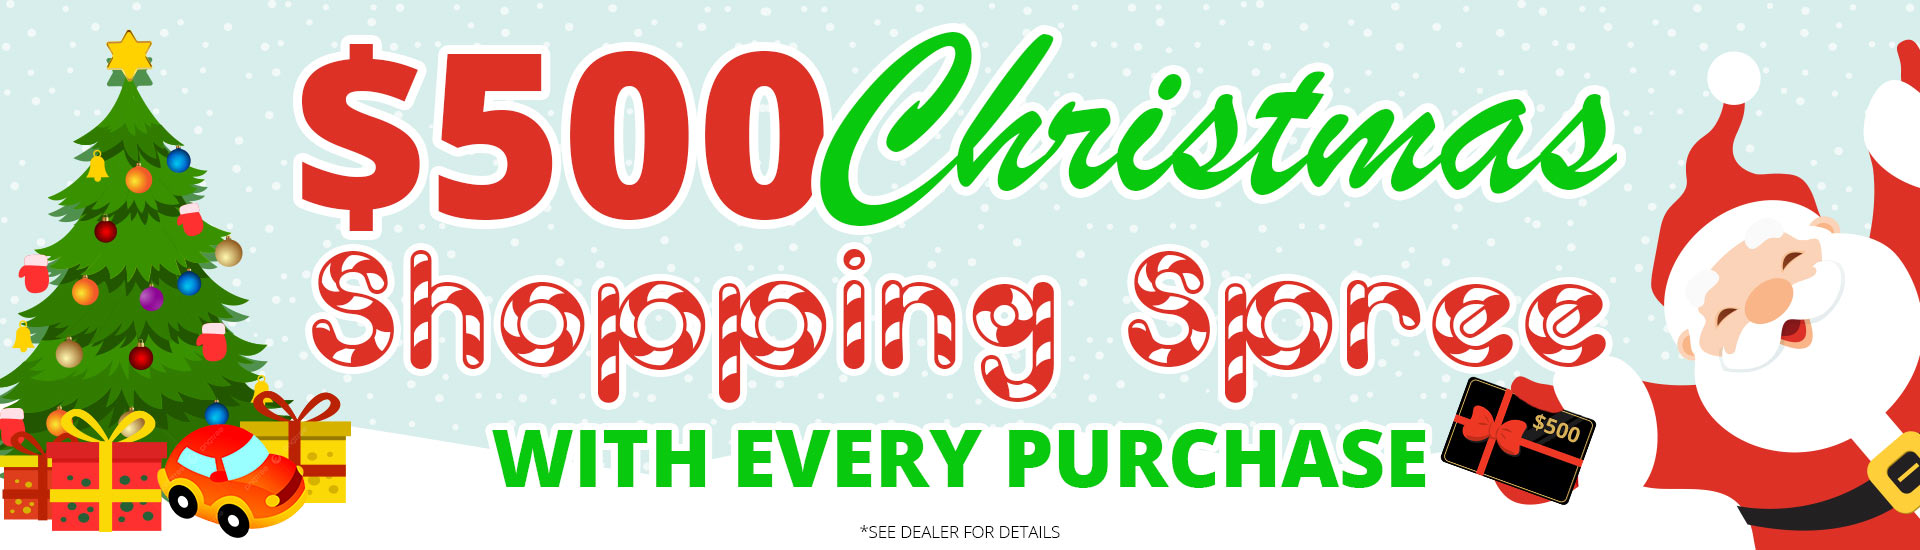 $500 Christmas Shopping Spree